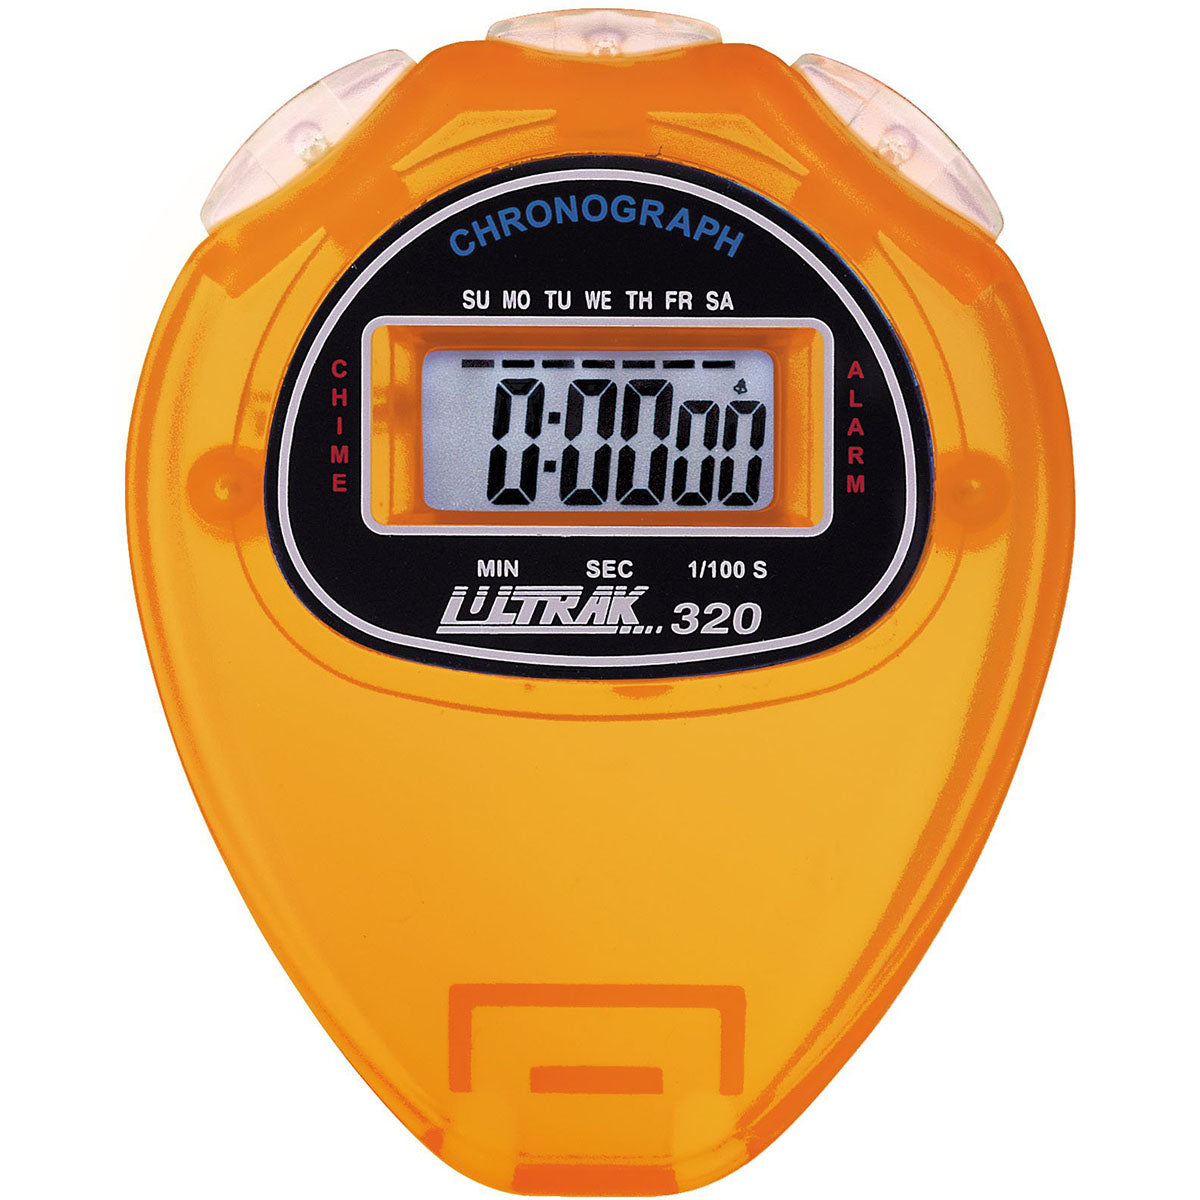 Ultrak 320 - Economical Sport Stopwatches - Set of 6 Ultrak